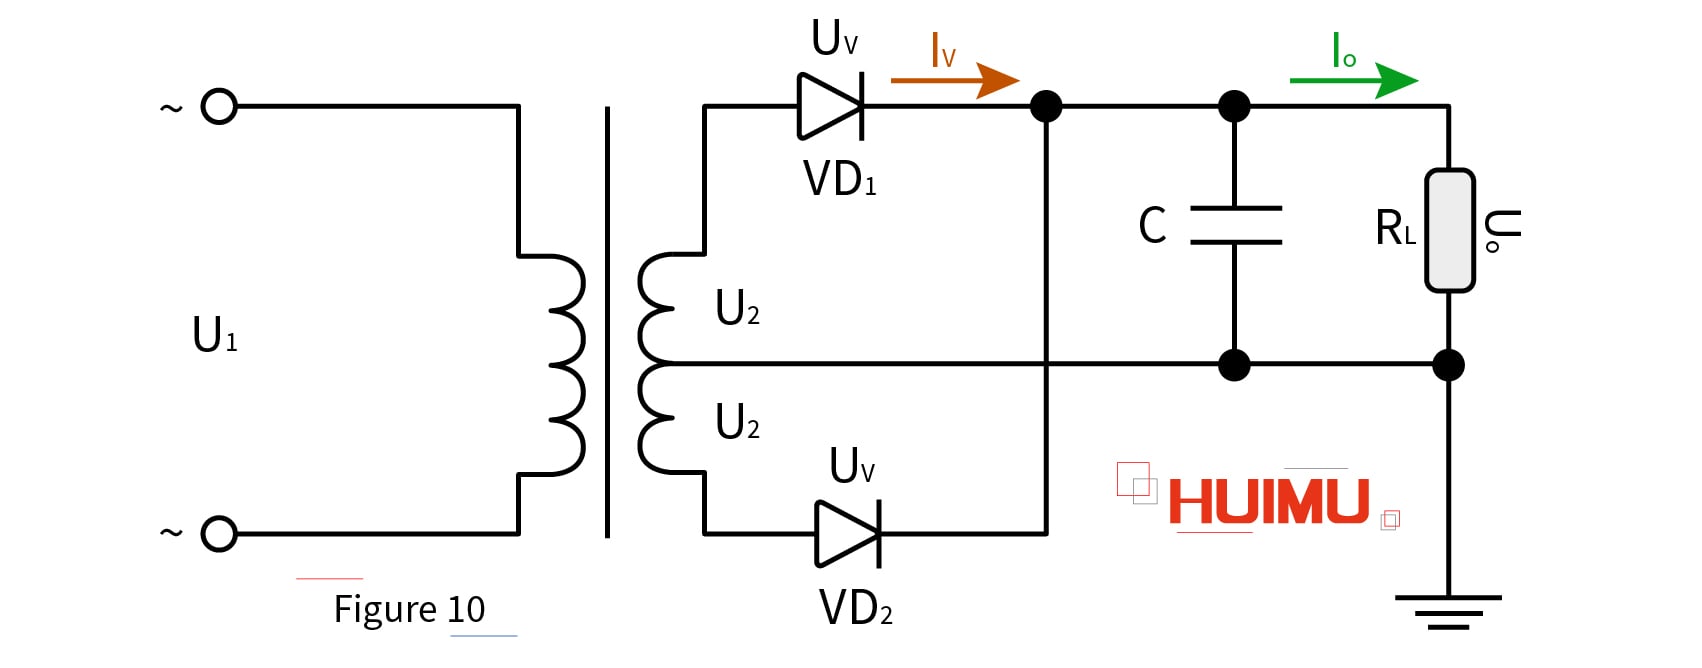 Single-Phase Full-Wave Rectification Filter Circuit. More details via sales@huimultd.com